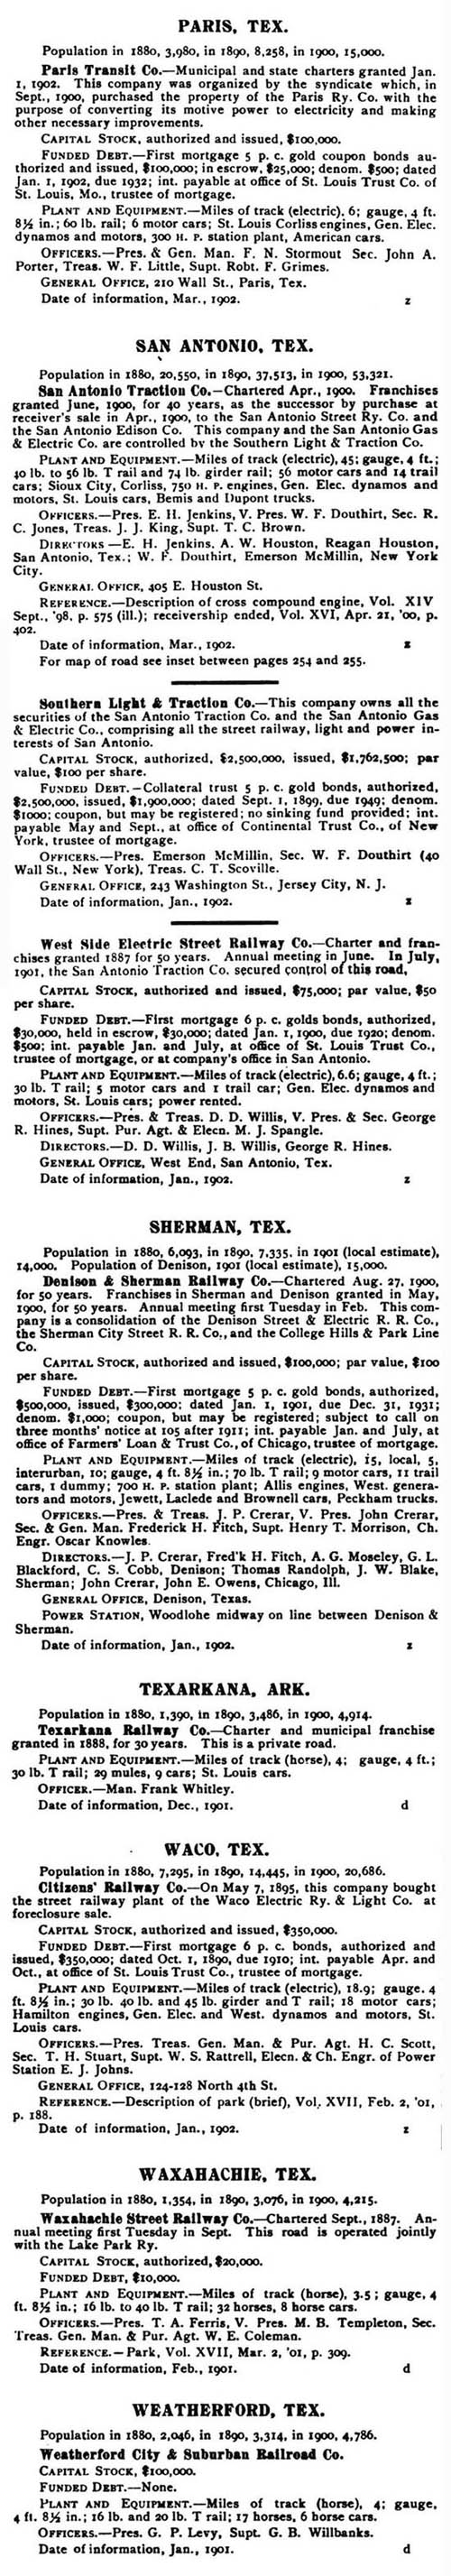 Texas Street Railways in 1902